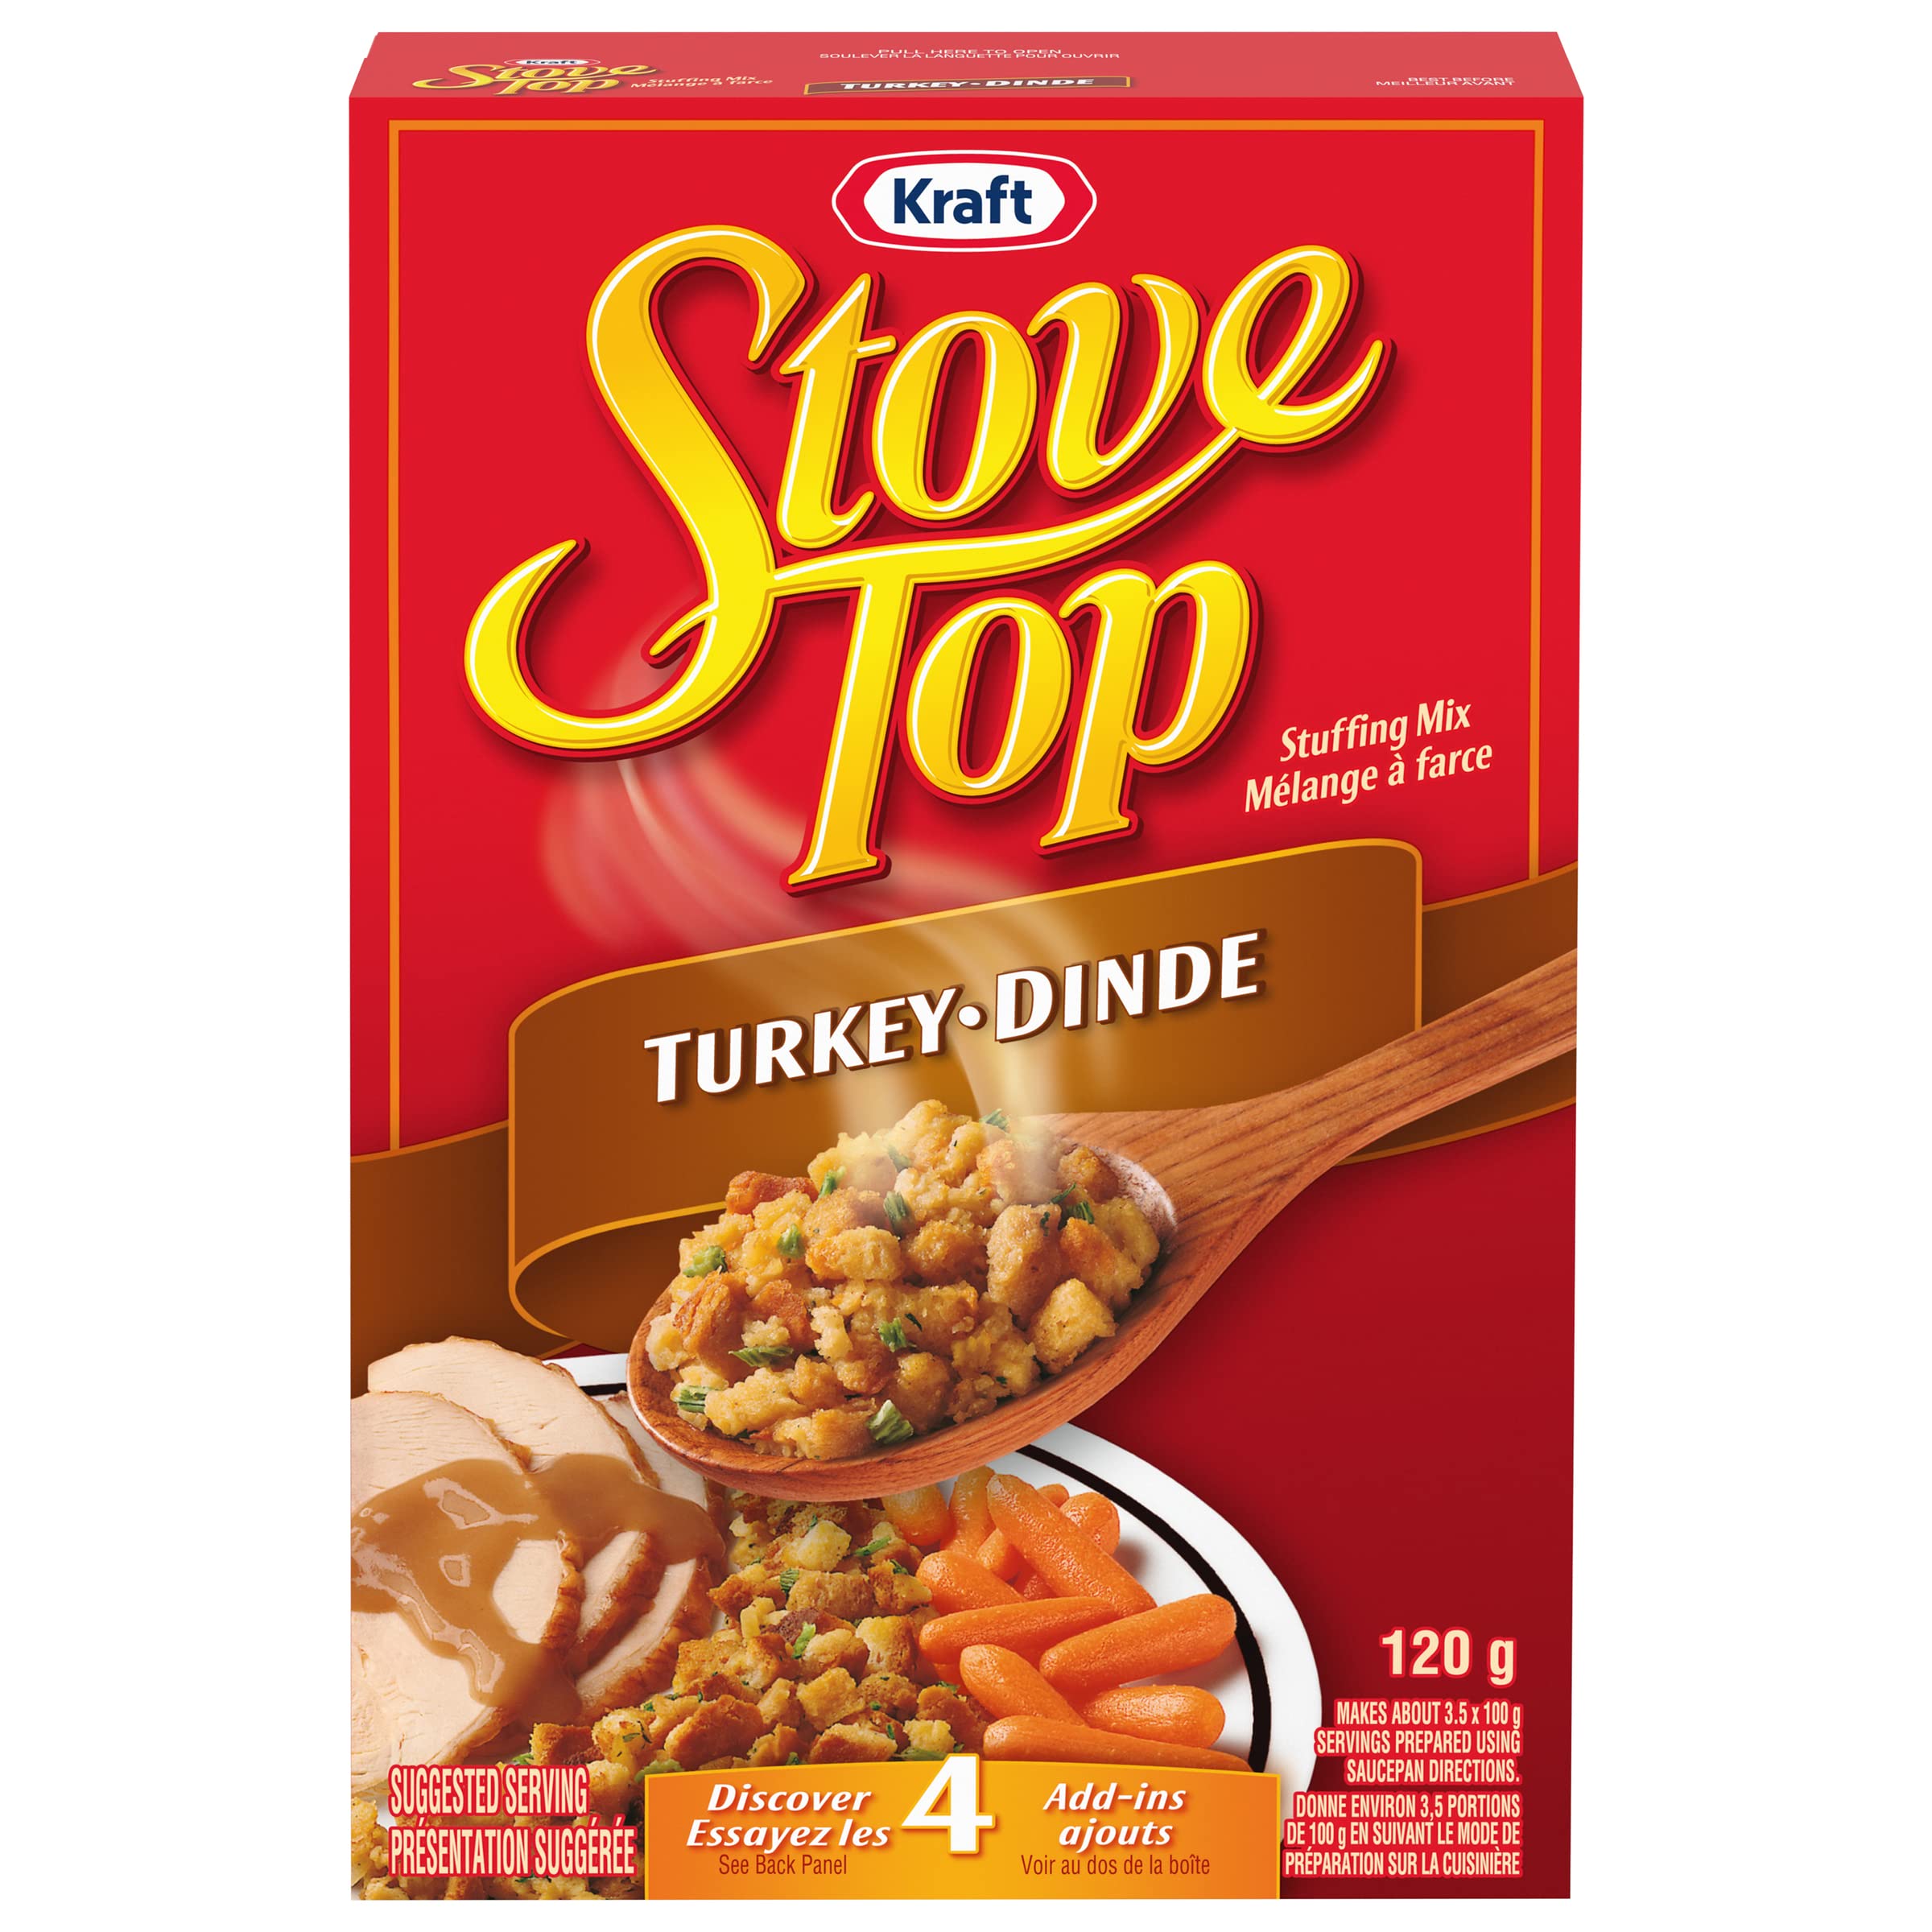 Stove Top Stuffing Mix Turkey (120g)